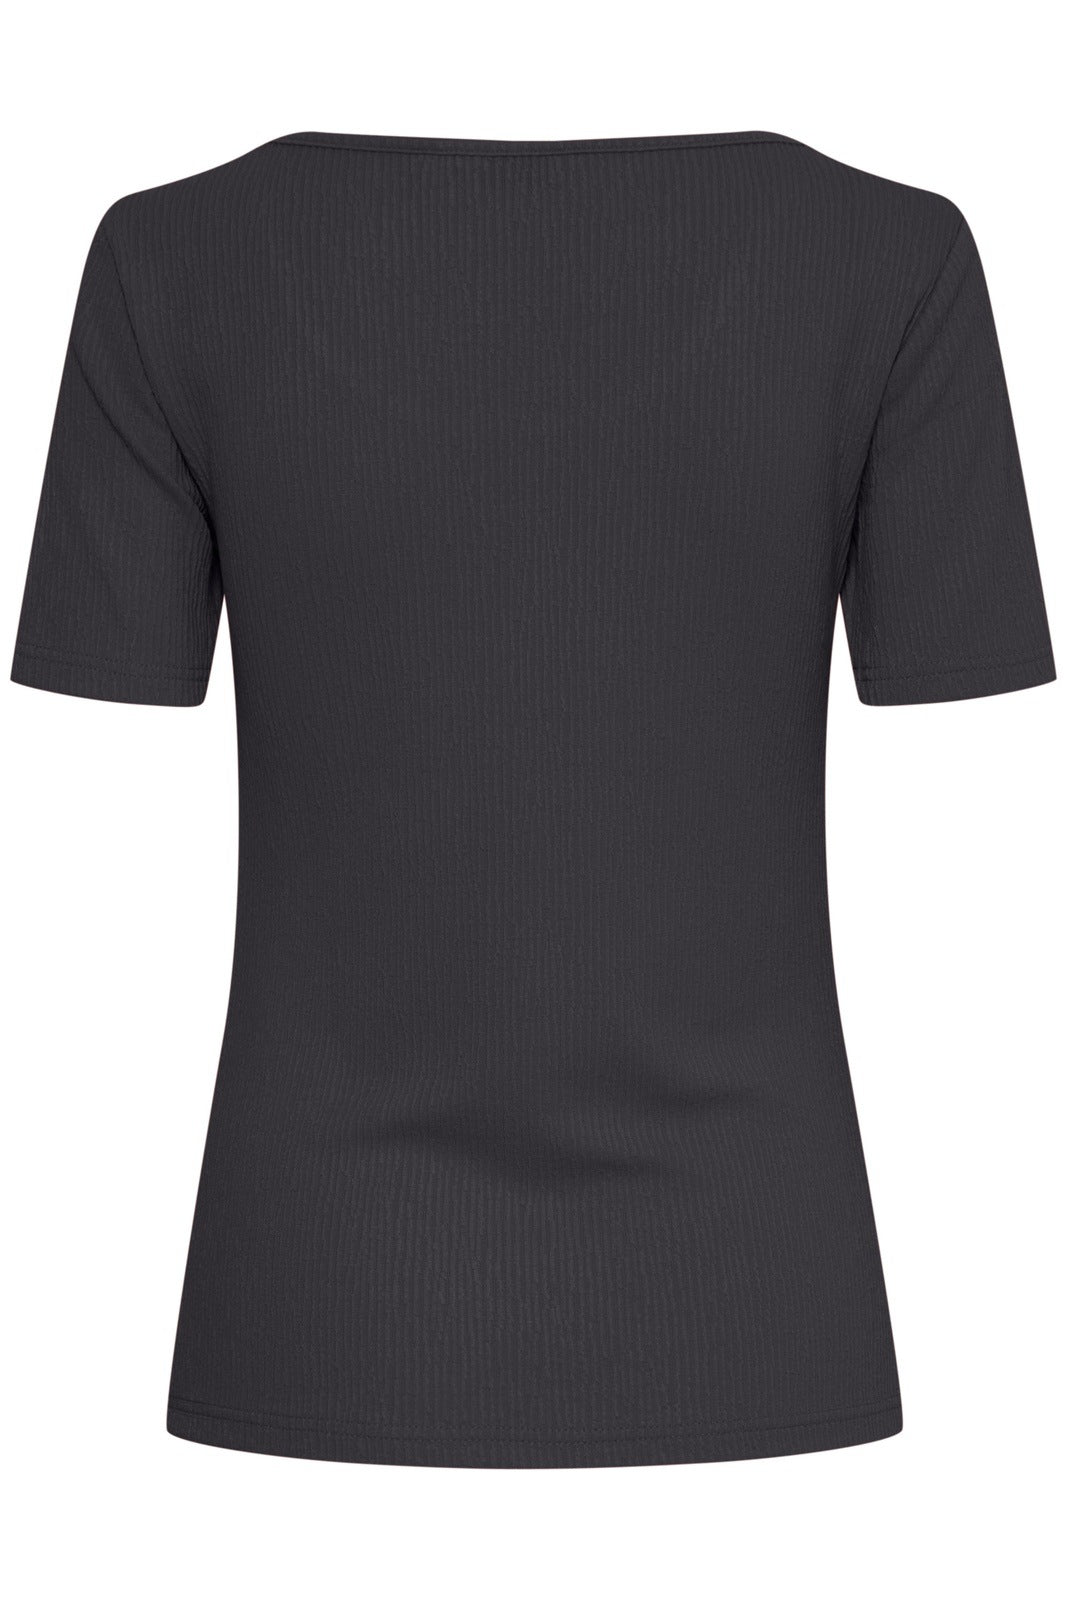 B.young Rimanila T-Shirt - Black 3 Shaws Department Stores